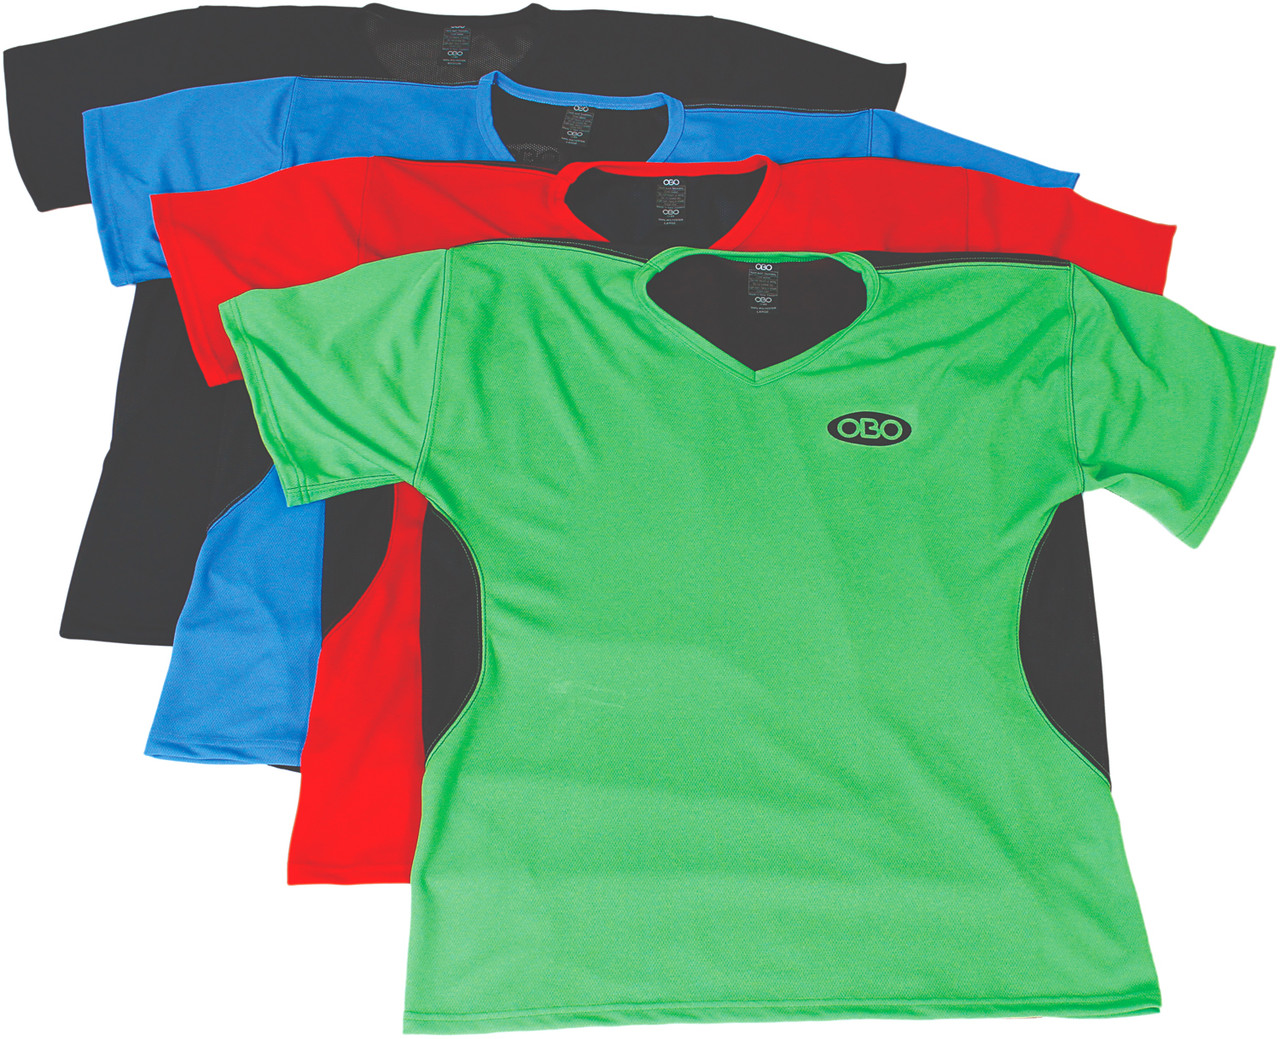 Custom Field Hockey Uniforms and Field Hockey Jerseys, Custom Field Hockey  Jerseys